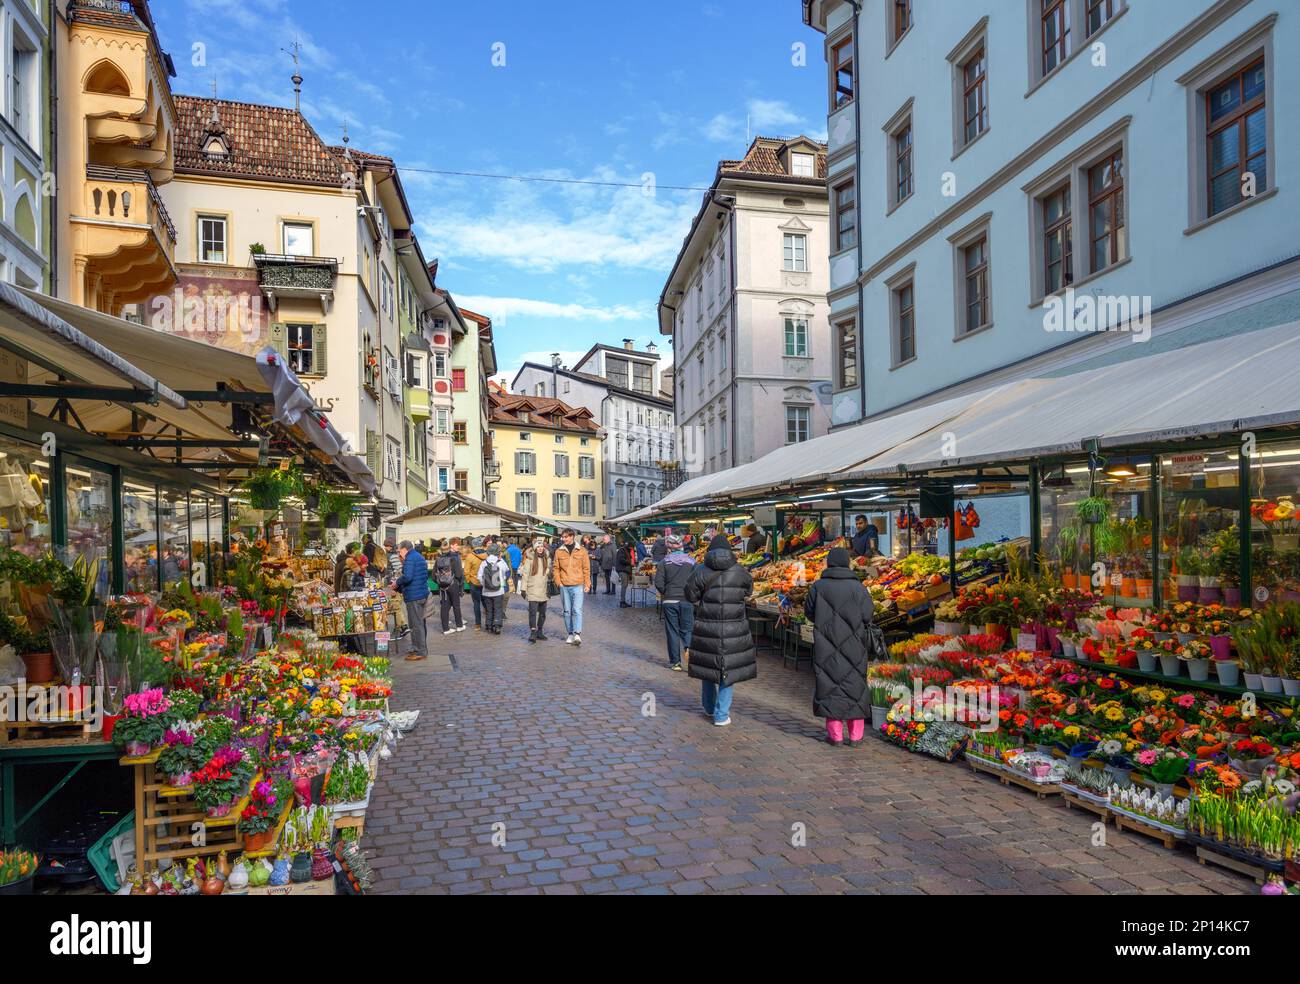 Market stalls on Piazza delle Erbe, Bolzano, Italy (Bozen) Stock Photo